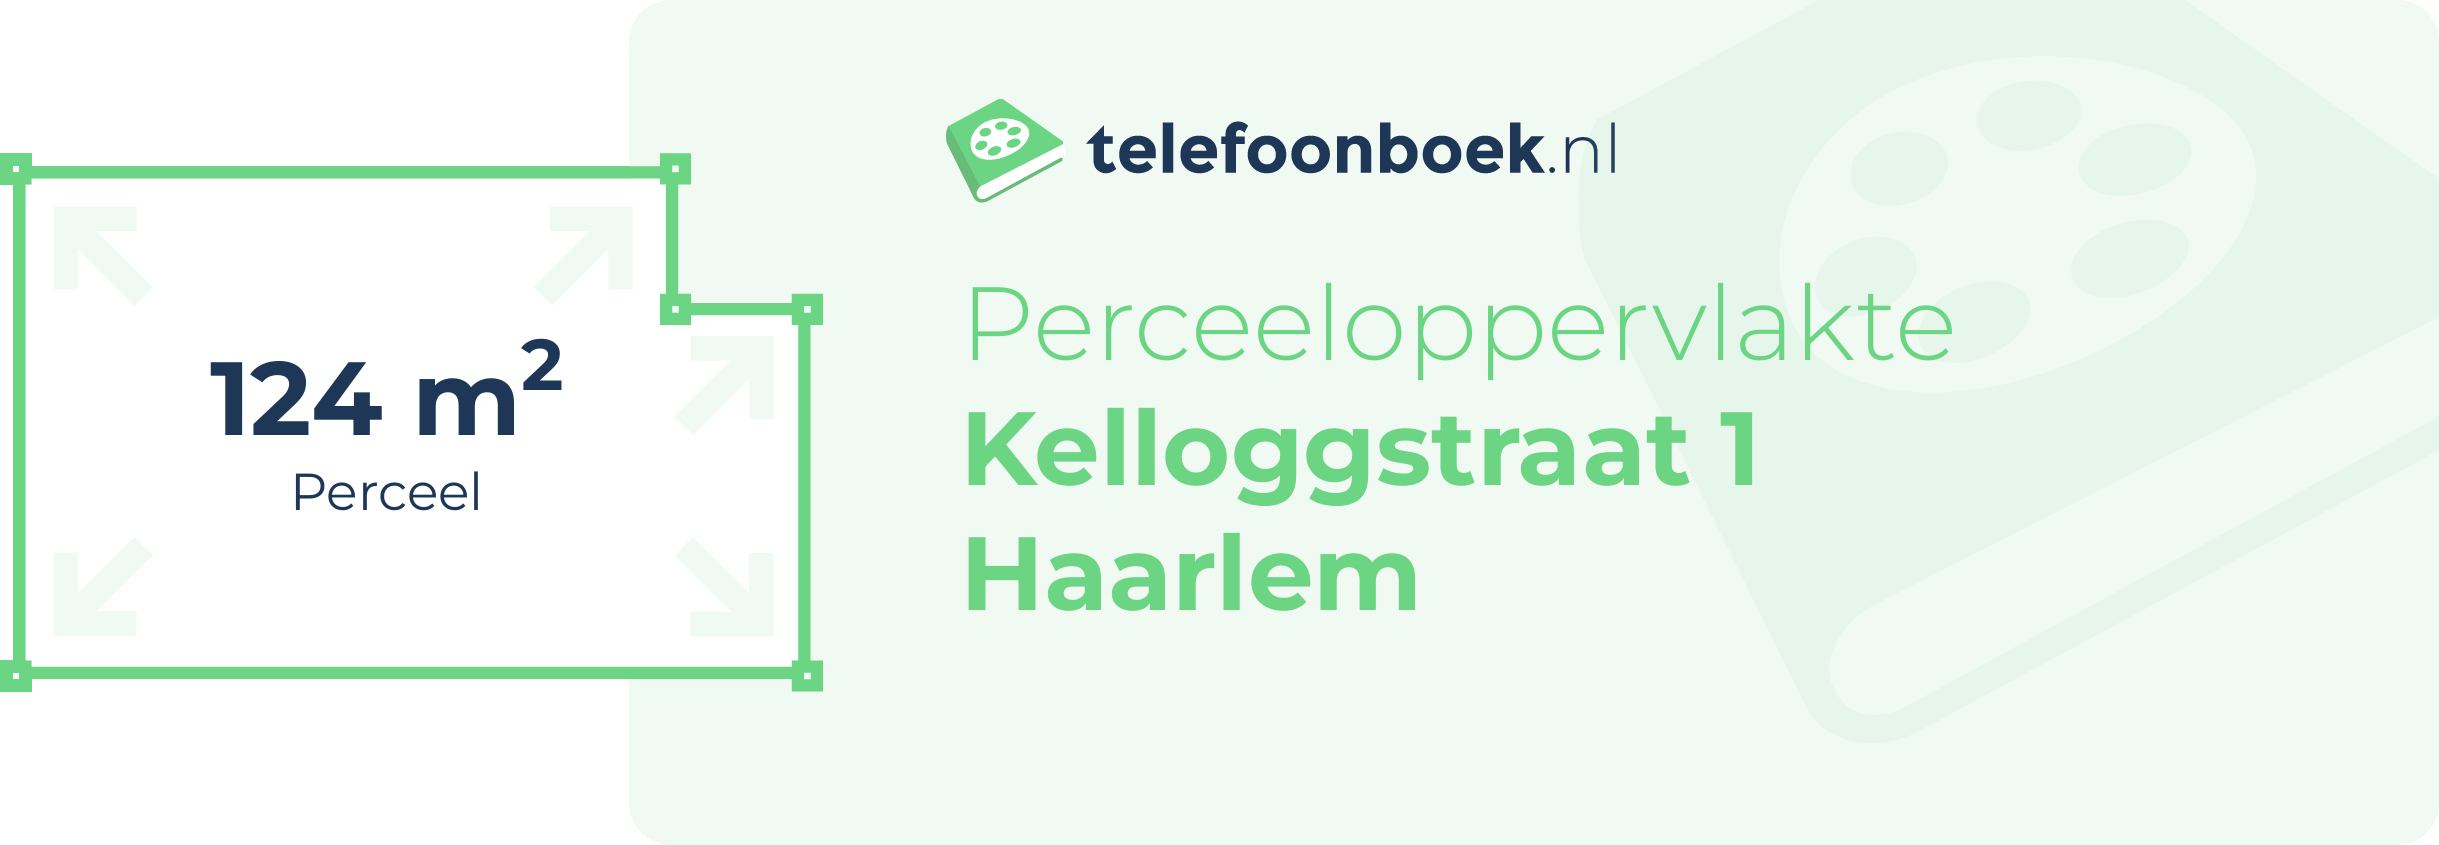 Perceeloppervlakte Kelloggstraat 1 Haarlem